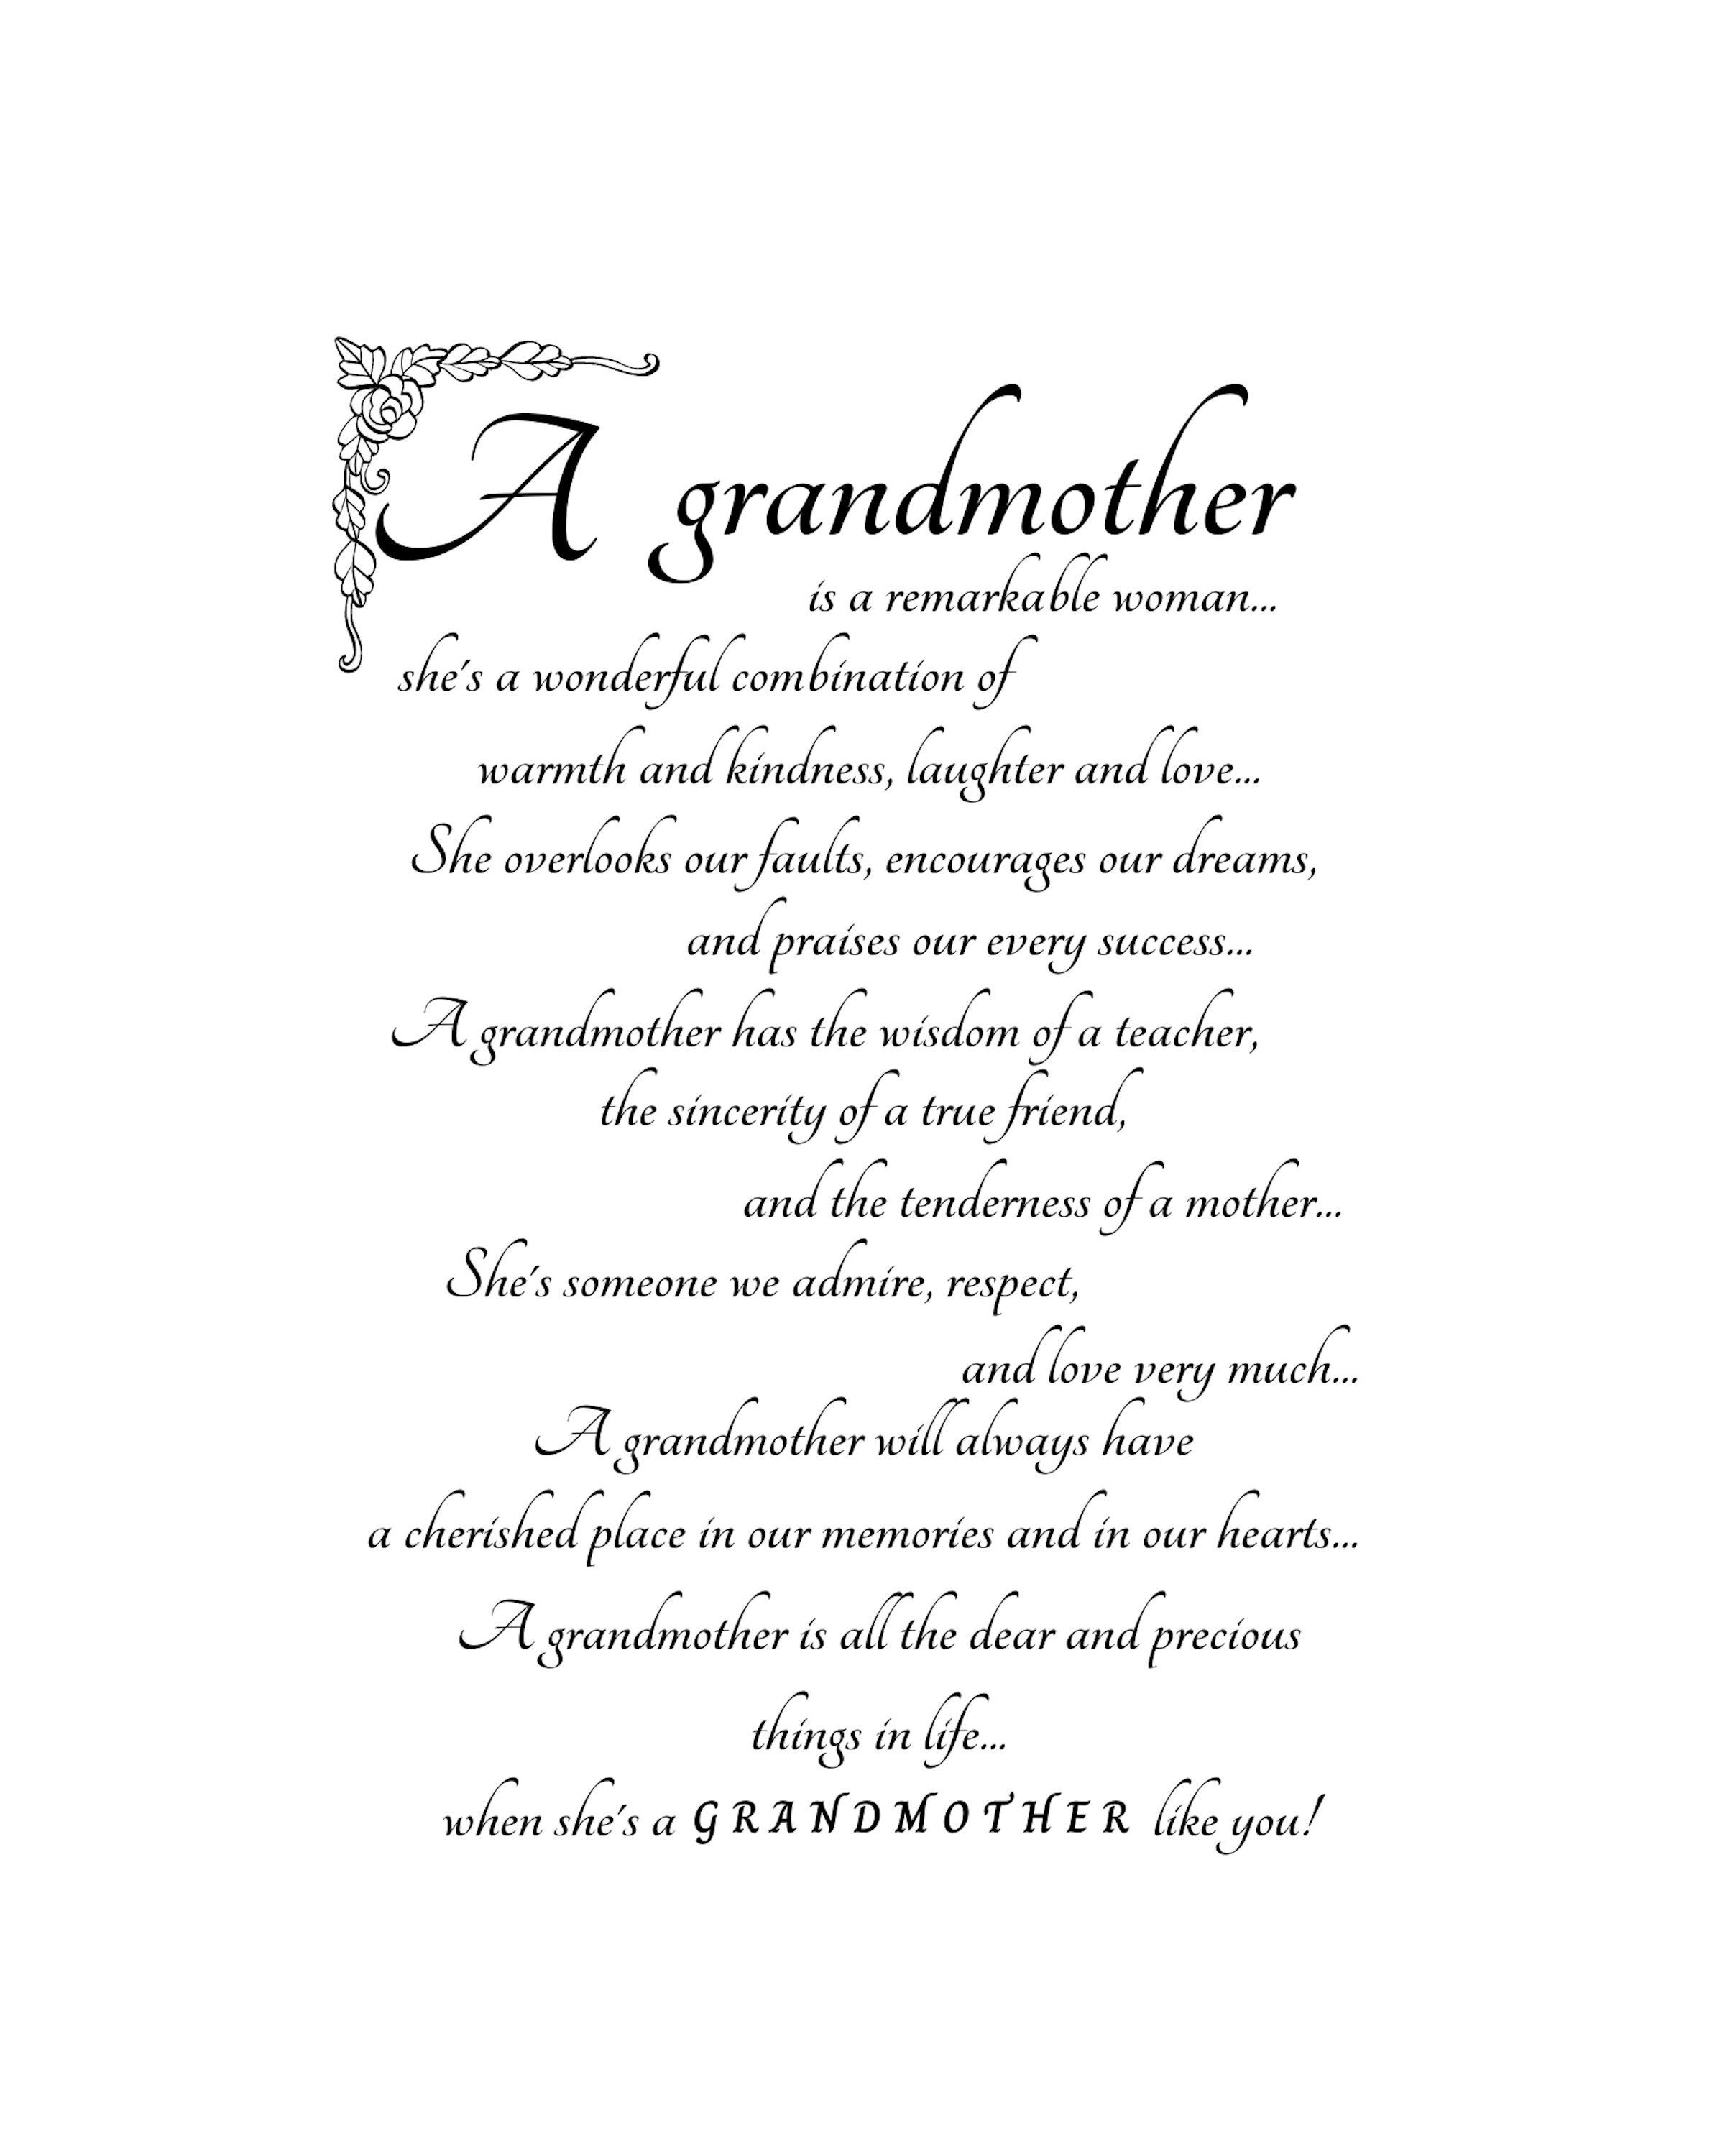 Grandmother's Prayer Poem Frame